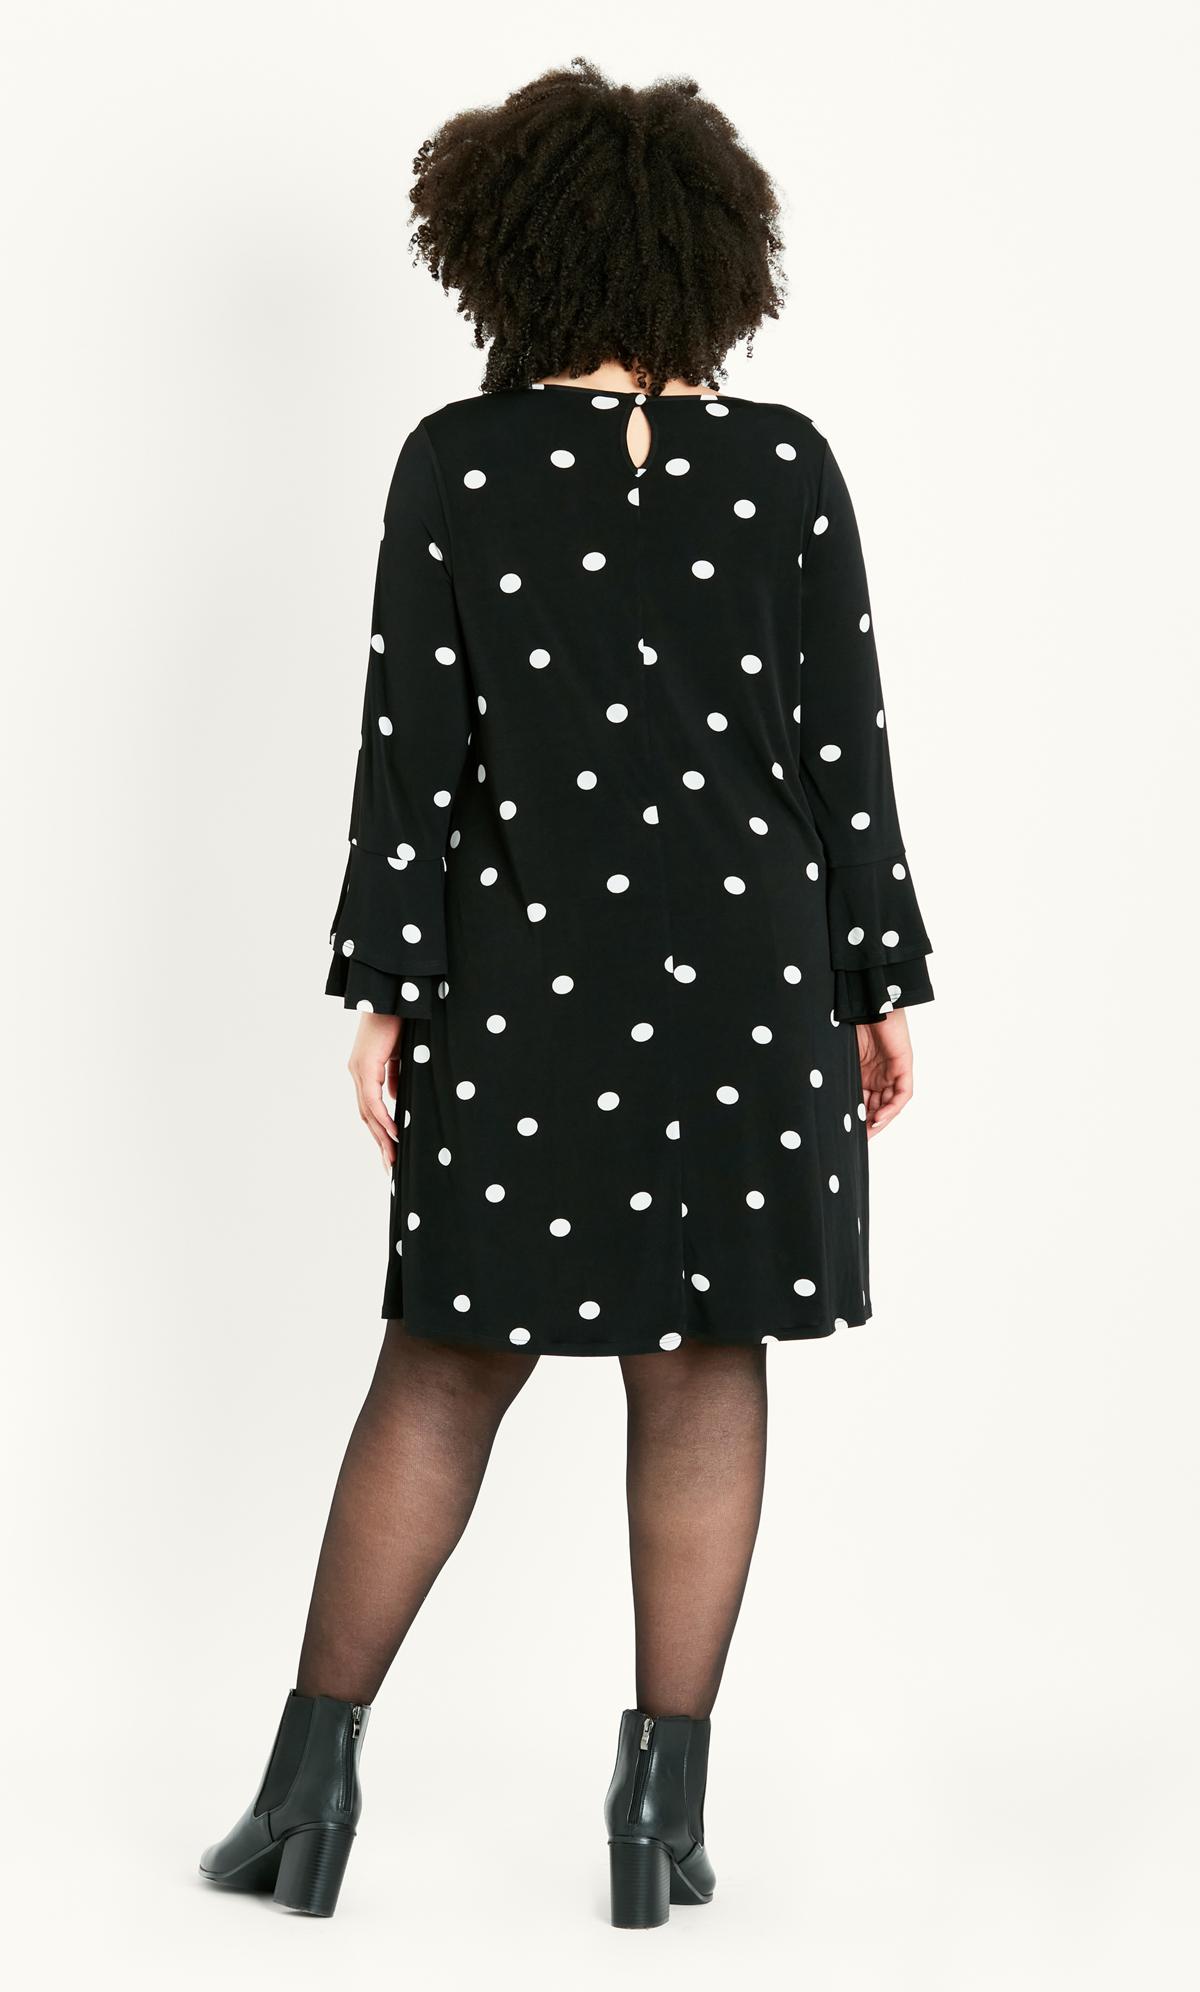 Frill Sleeve Black Print Dress 2